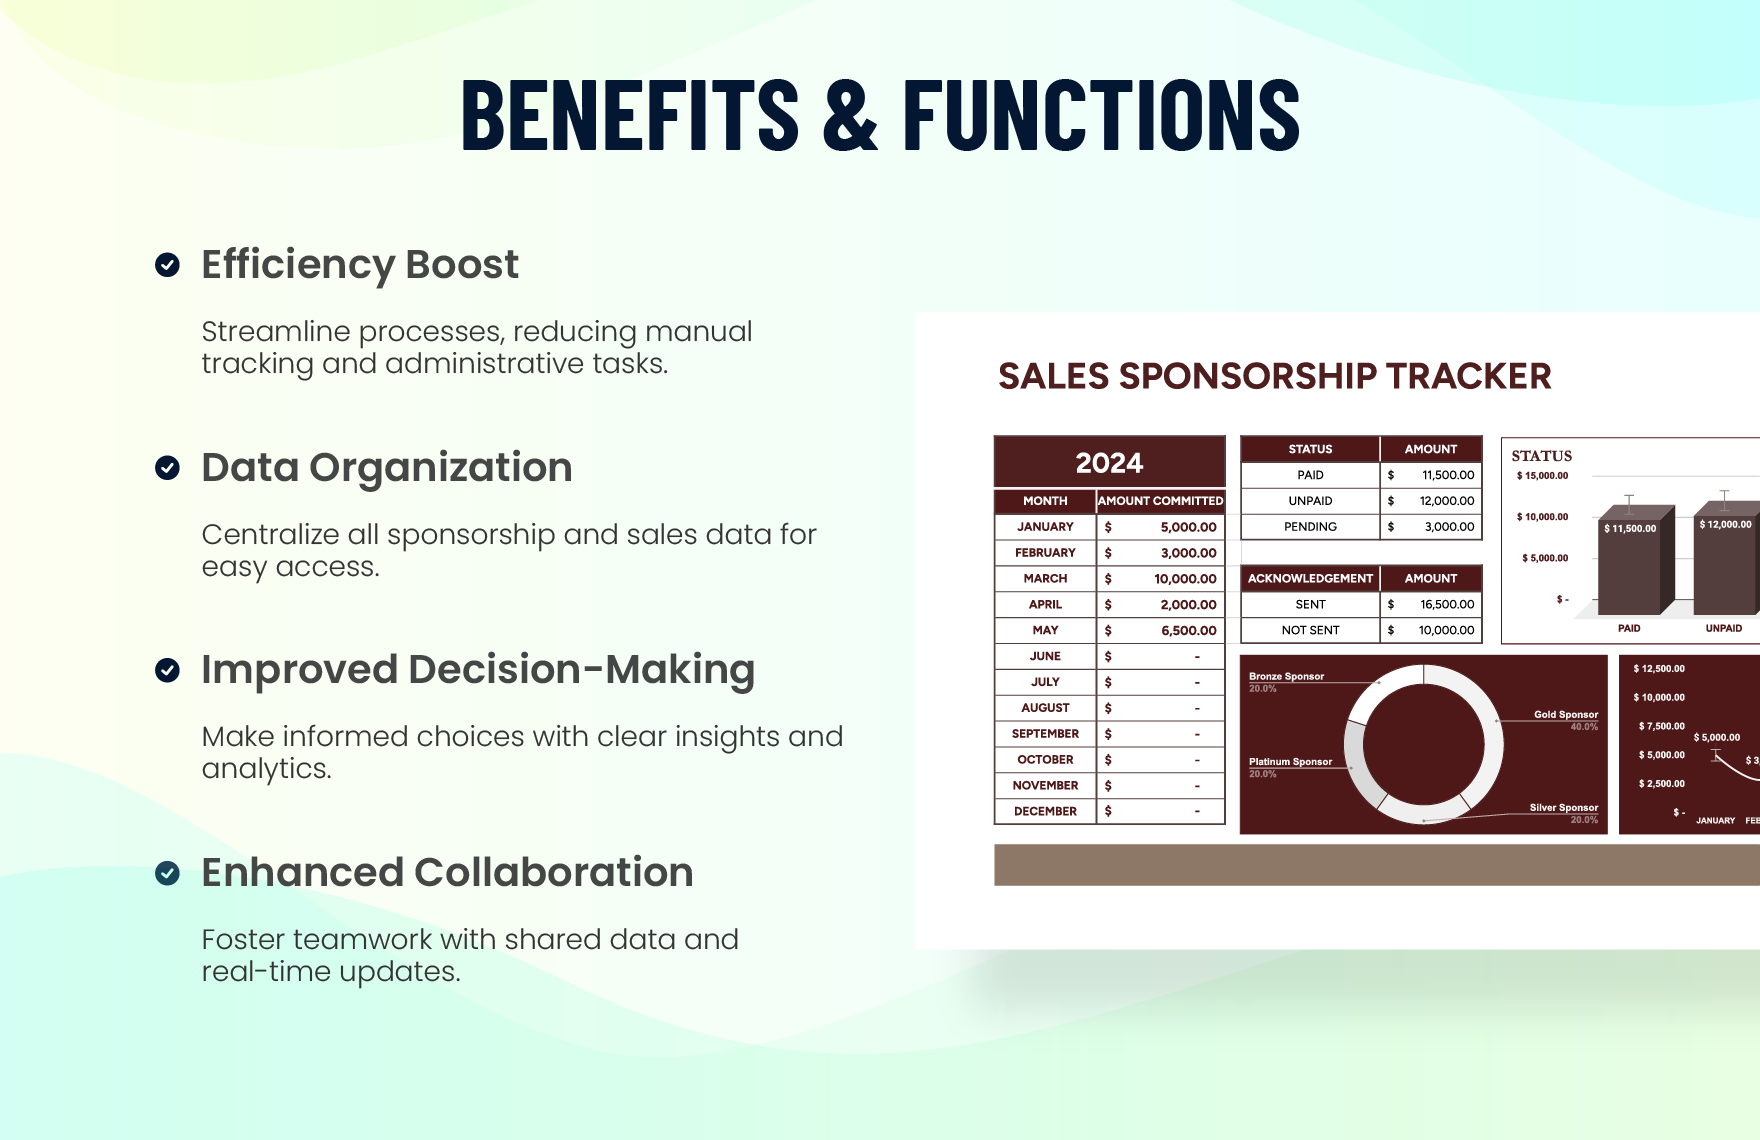 Sales Sponsorship Tracker Template